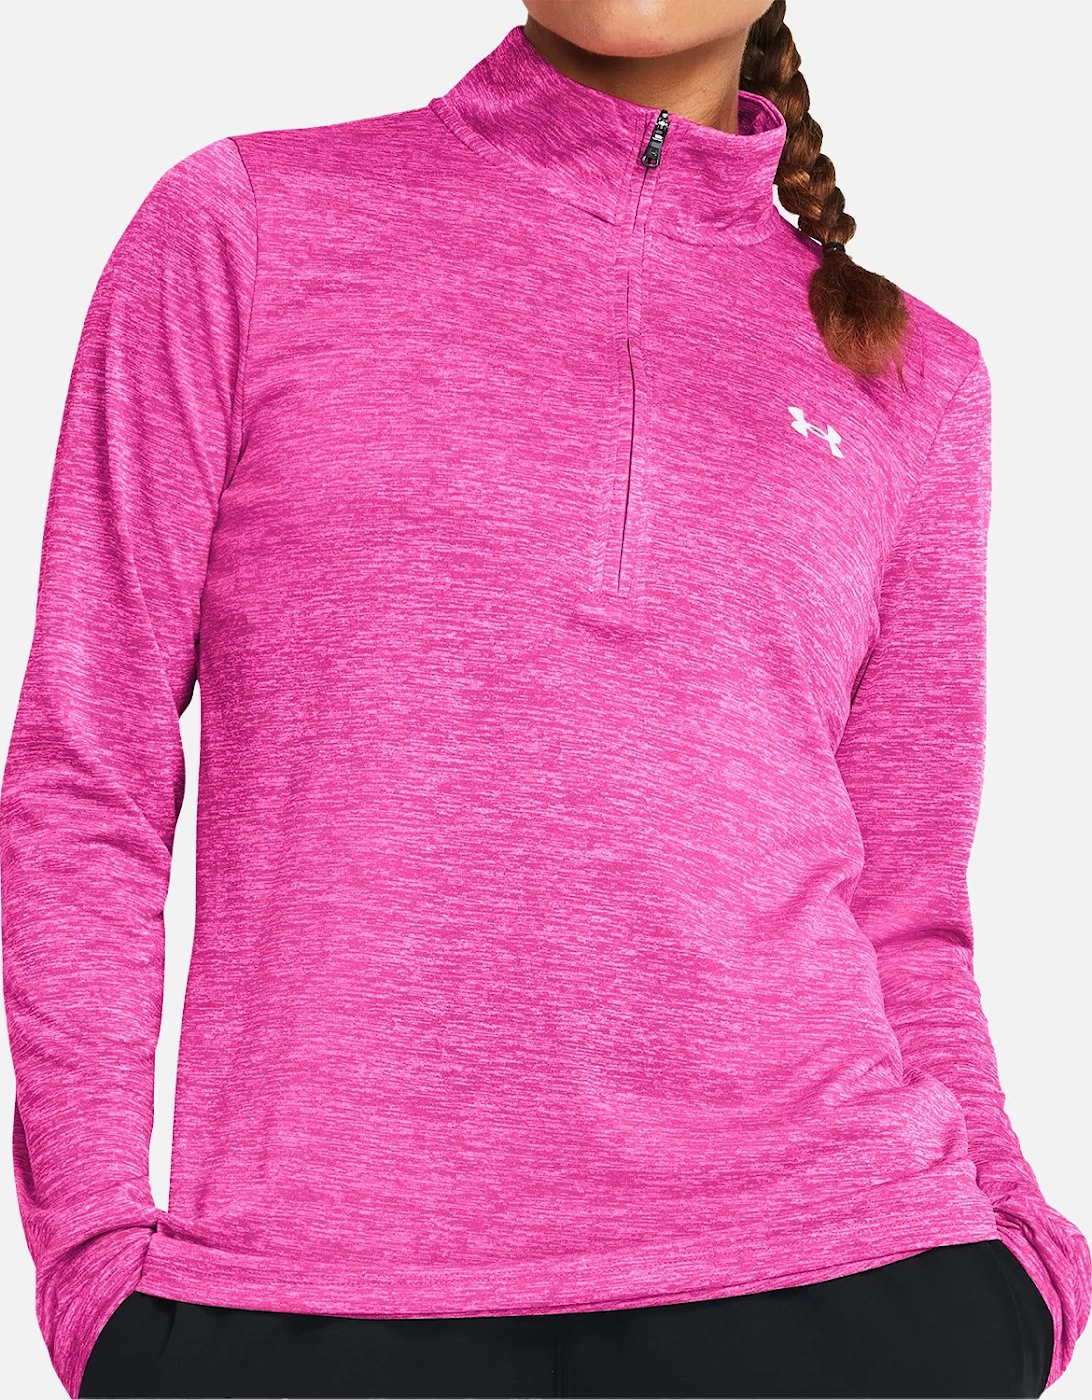 Womens Tech Twist 1/2 Zip Sweatshirt (Pink)